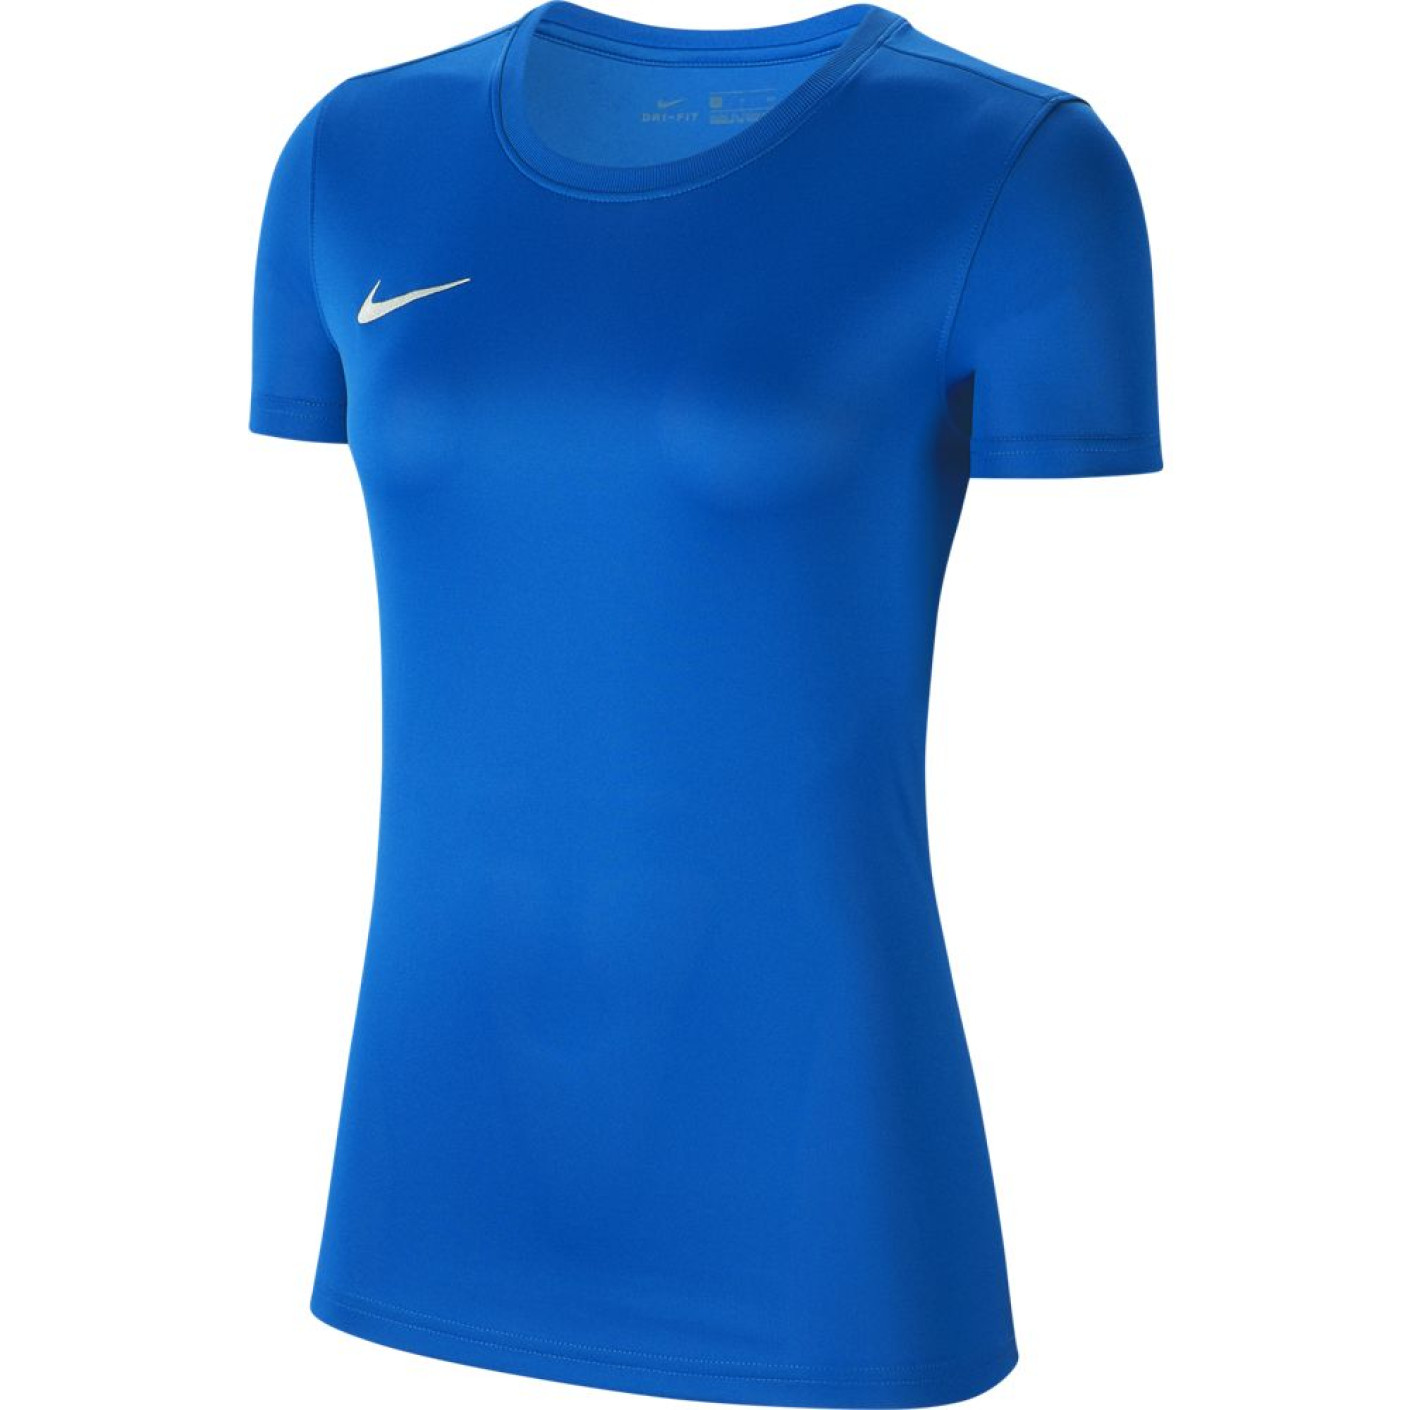 Nike Dry Park VII Women's Royal Blue Football Shirt